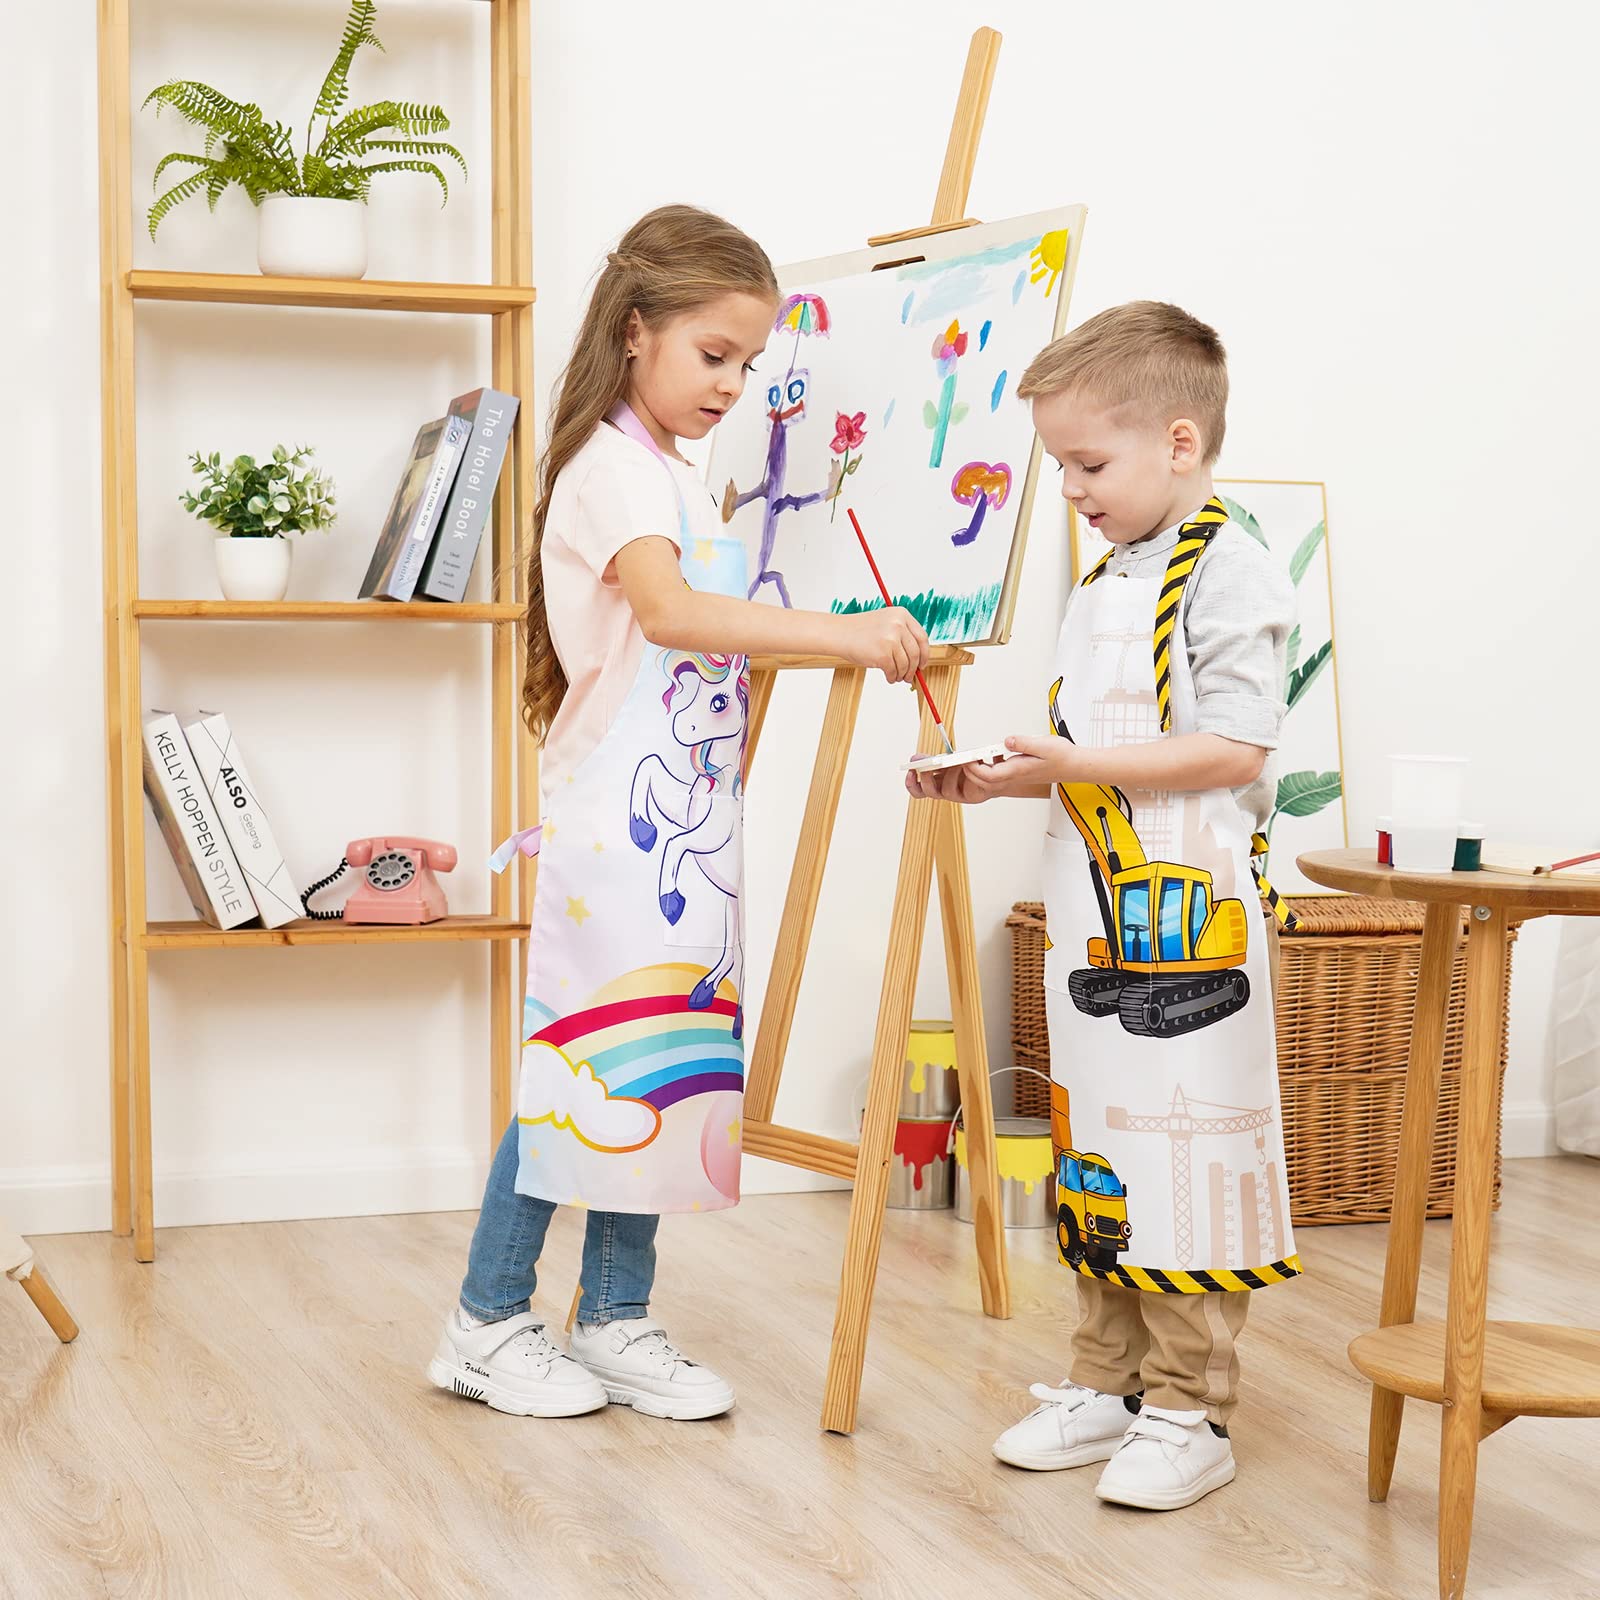 WERNNSAI Kids Aprons for Toddler Art Aprons Waterproof Kids Toddler Paint Art Smock